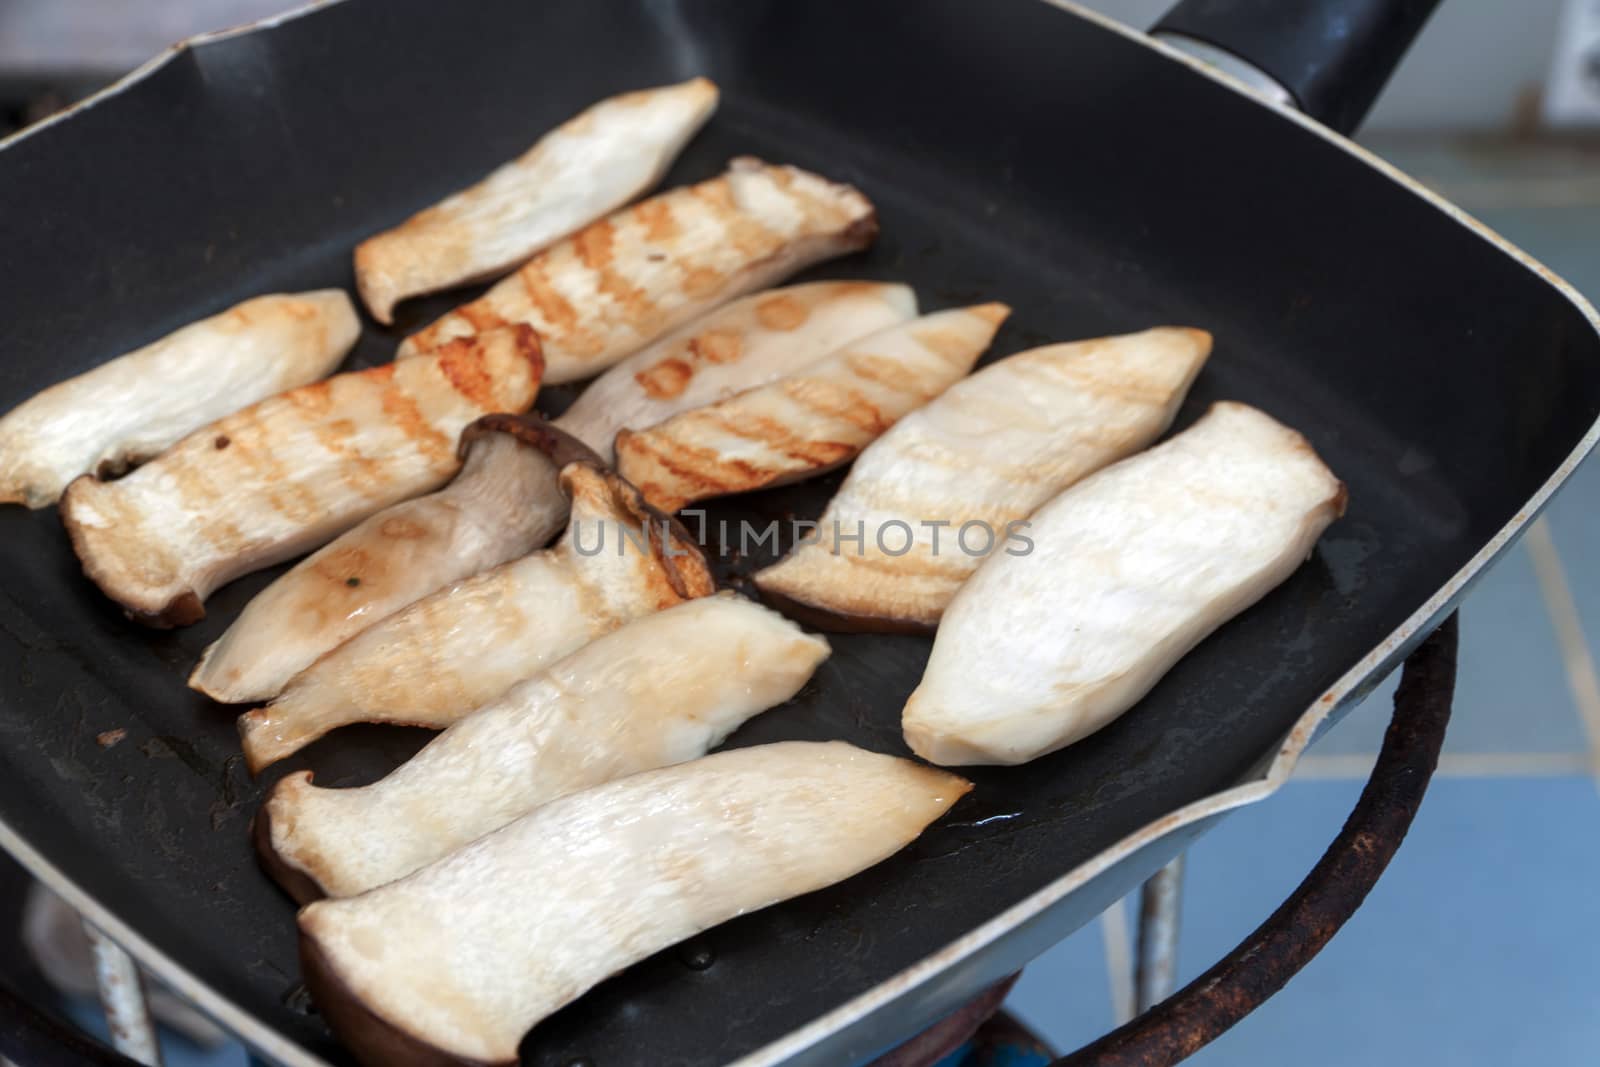 Cooking mushrooms and cheese on a grill pan. Pleurotus Eryngii (King Oyster Mushroom)